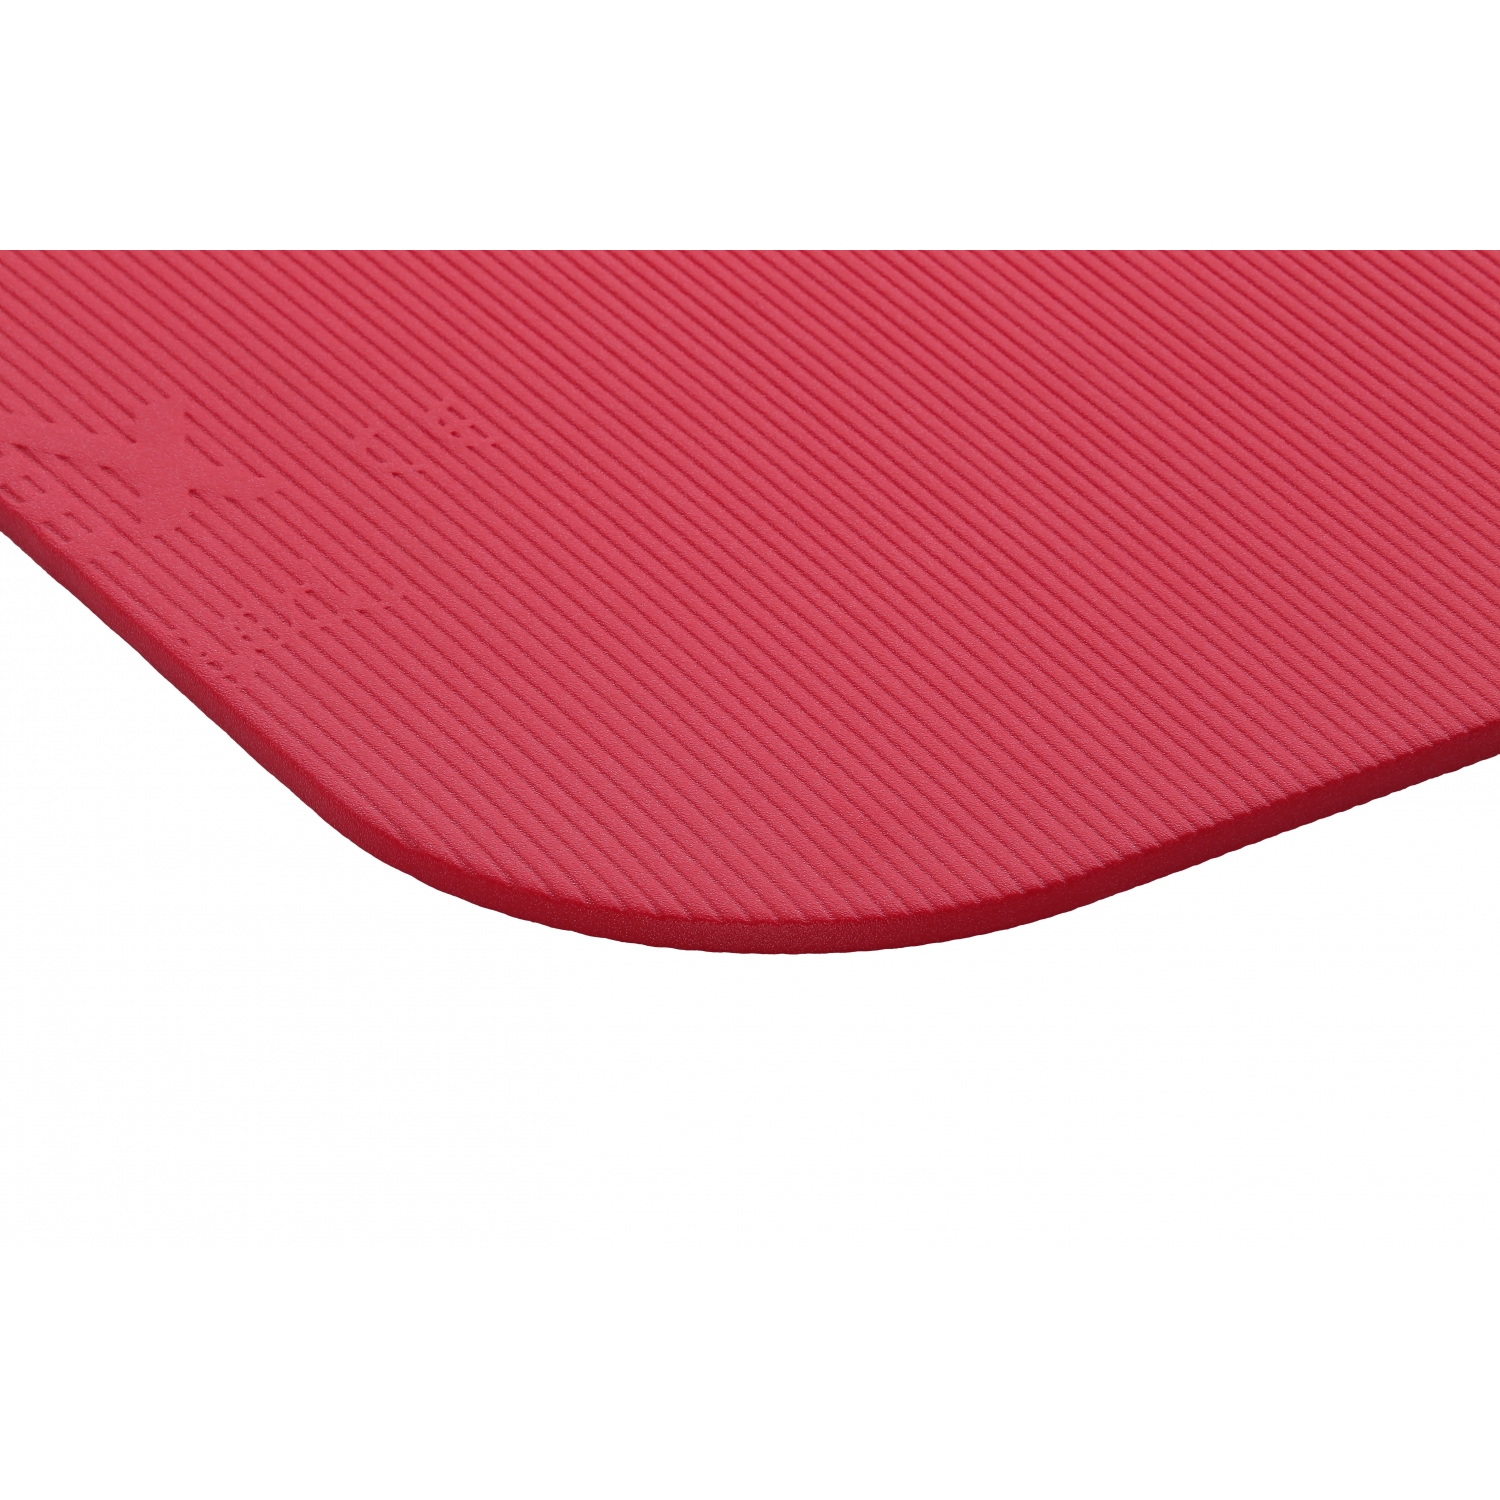 Airex tapis Corona - 185 x 100 x 1,5 cm - rouge